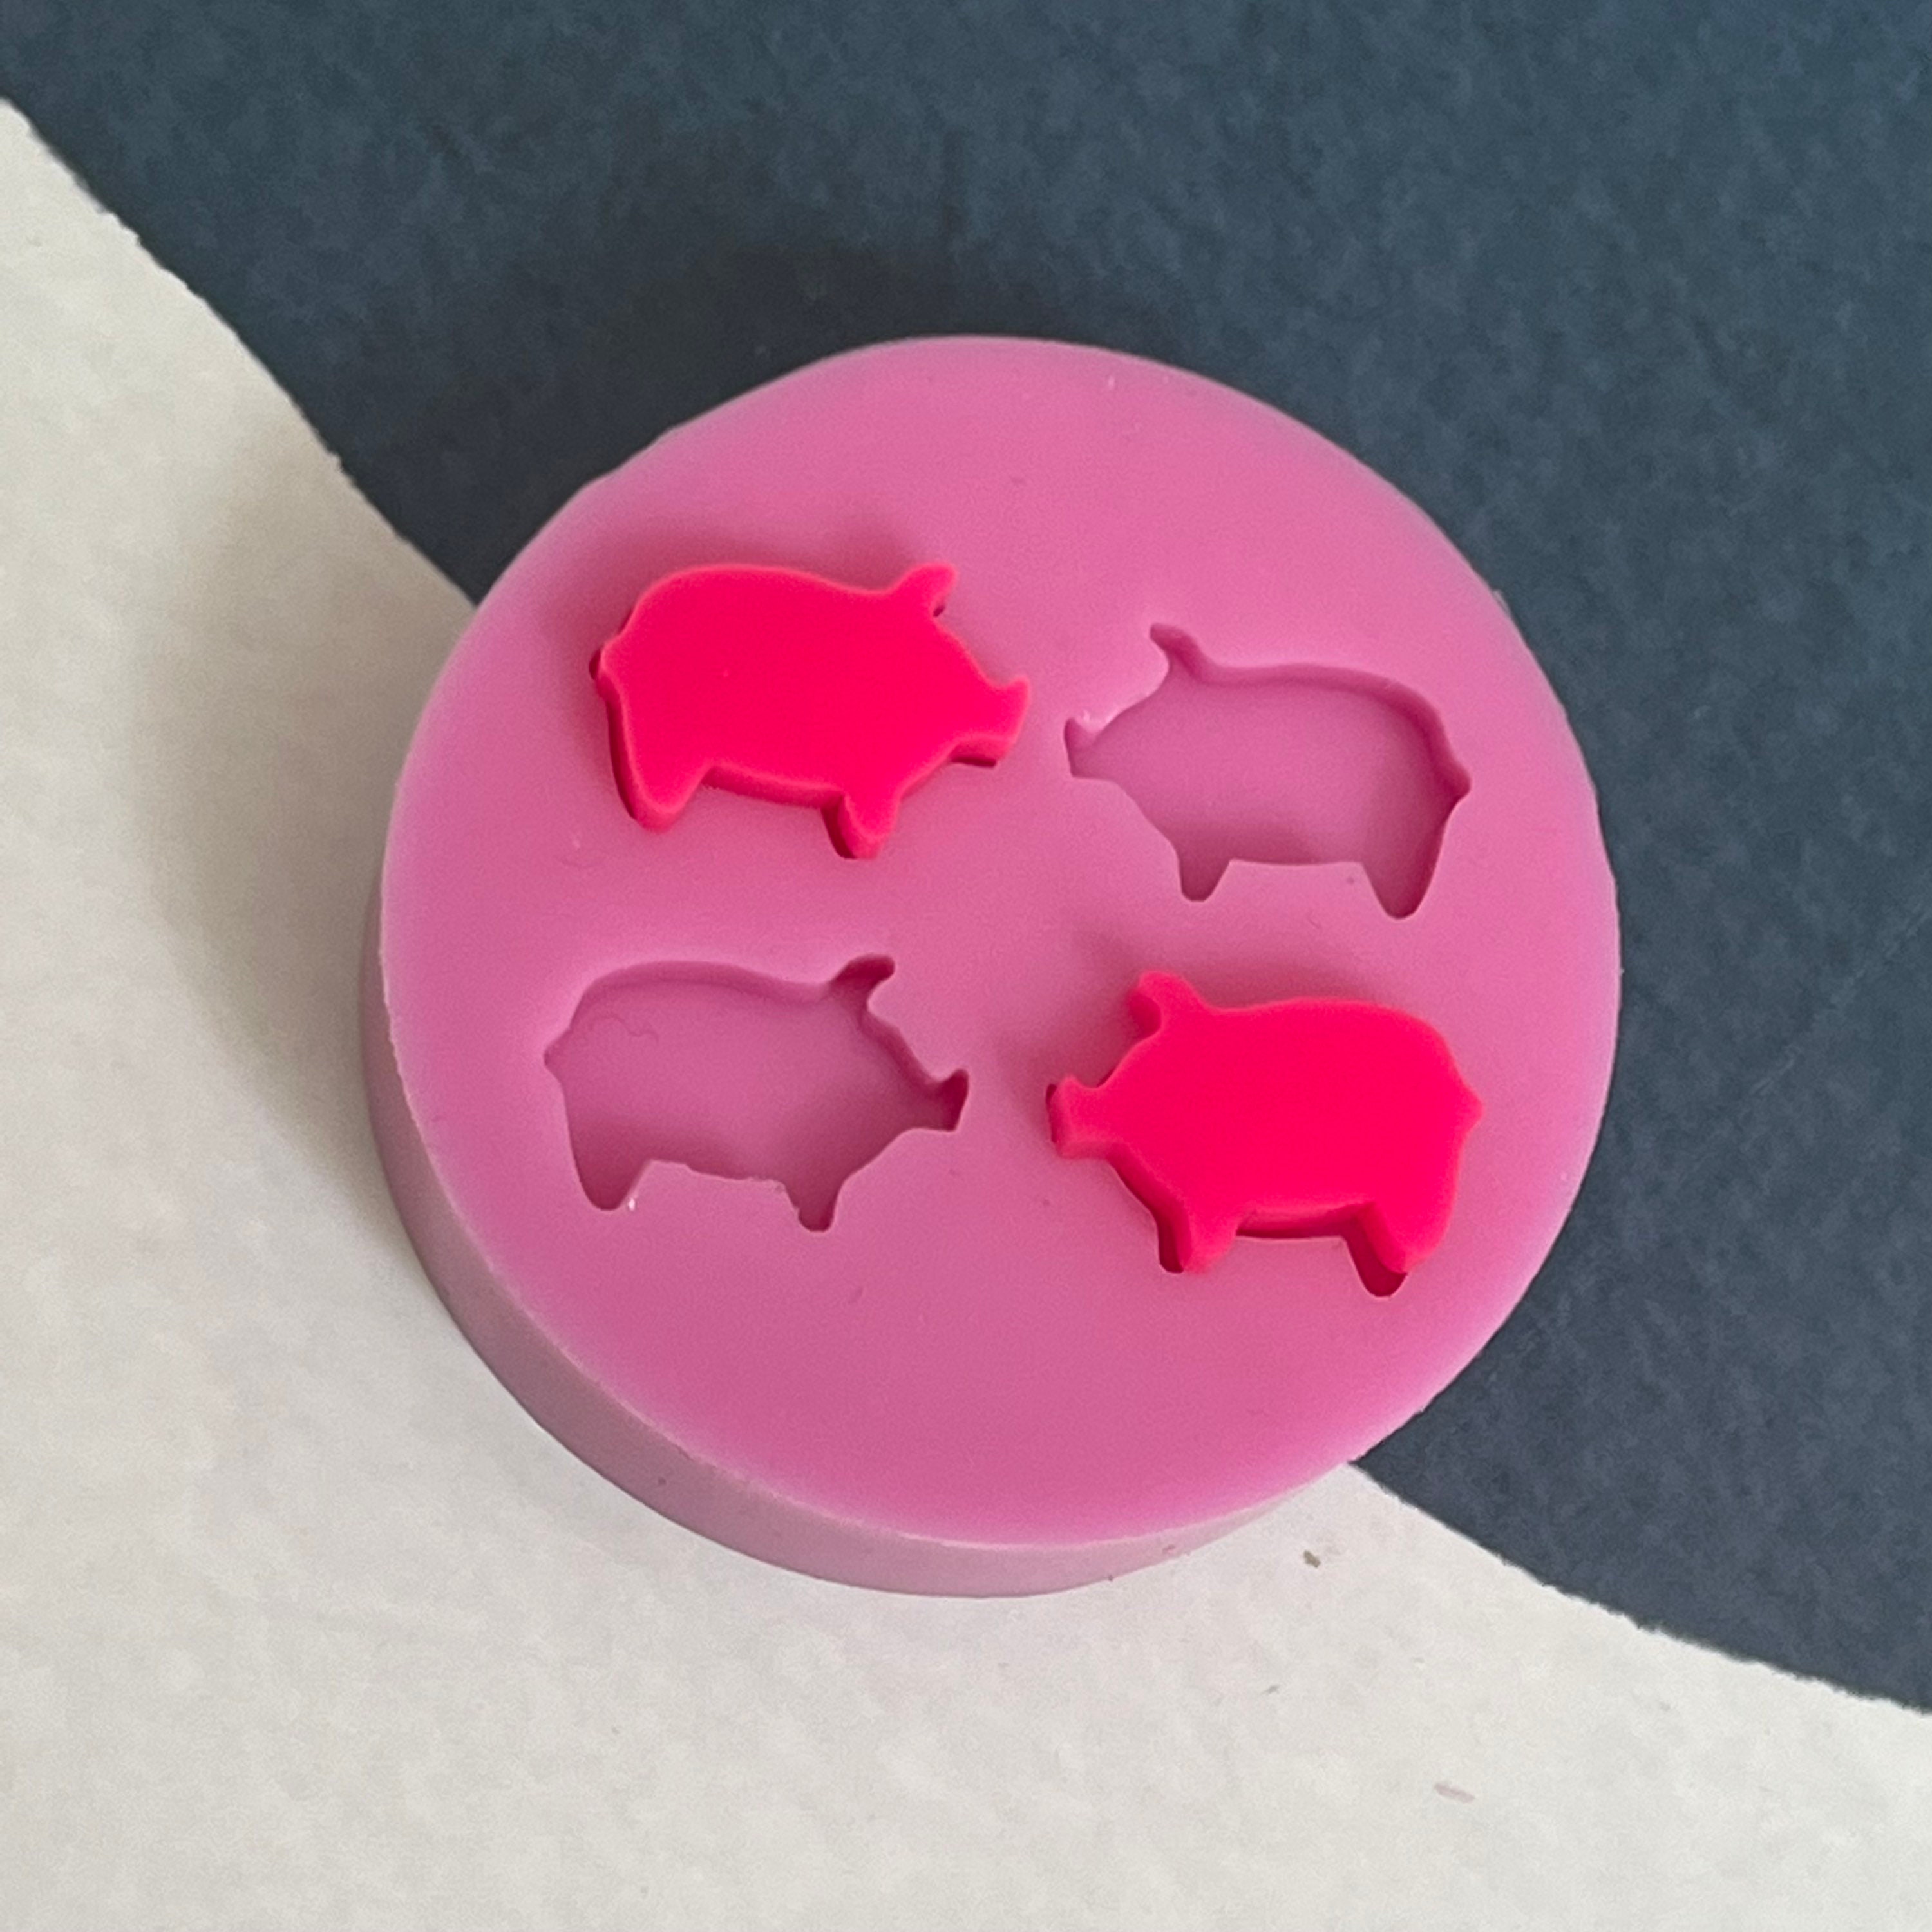 Baby Pig Lying Down Ornament Resin Mini Figurine Plus Magnet